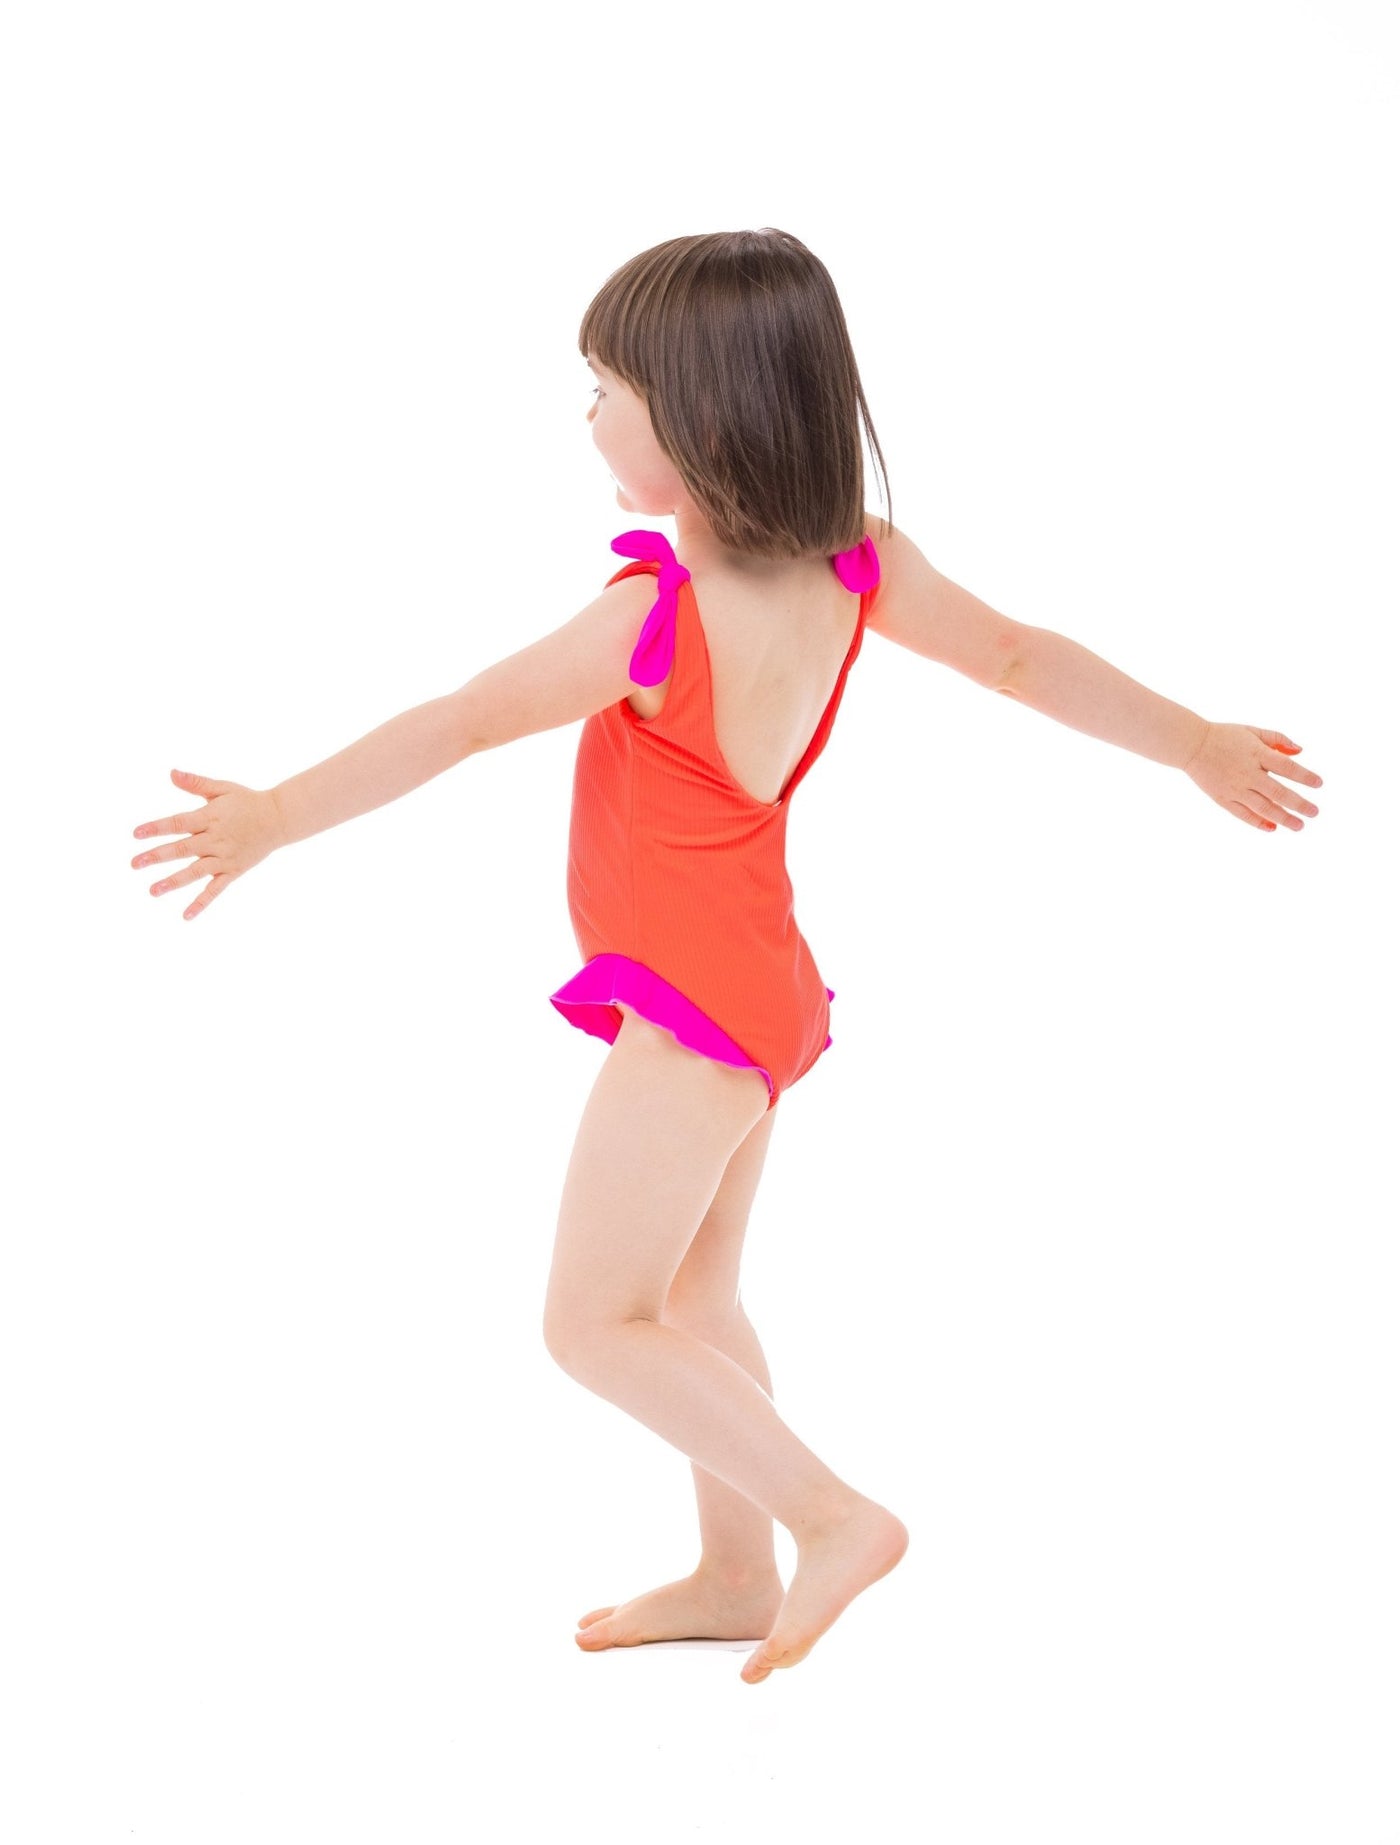 Lulu Girls One Piece Swimsuit - Heatwave Neon Coral - Kids Swim - JMP The Label